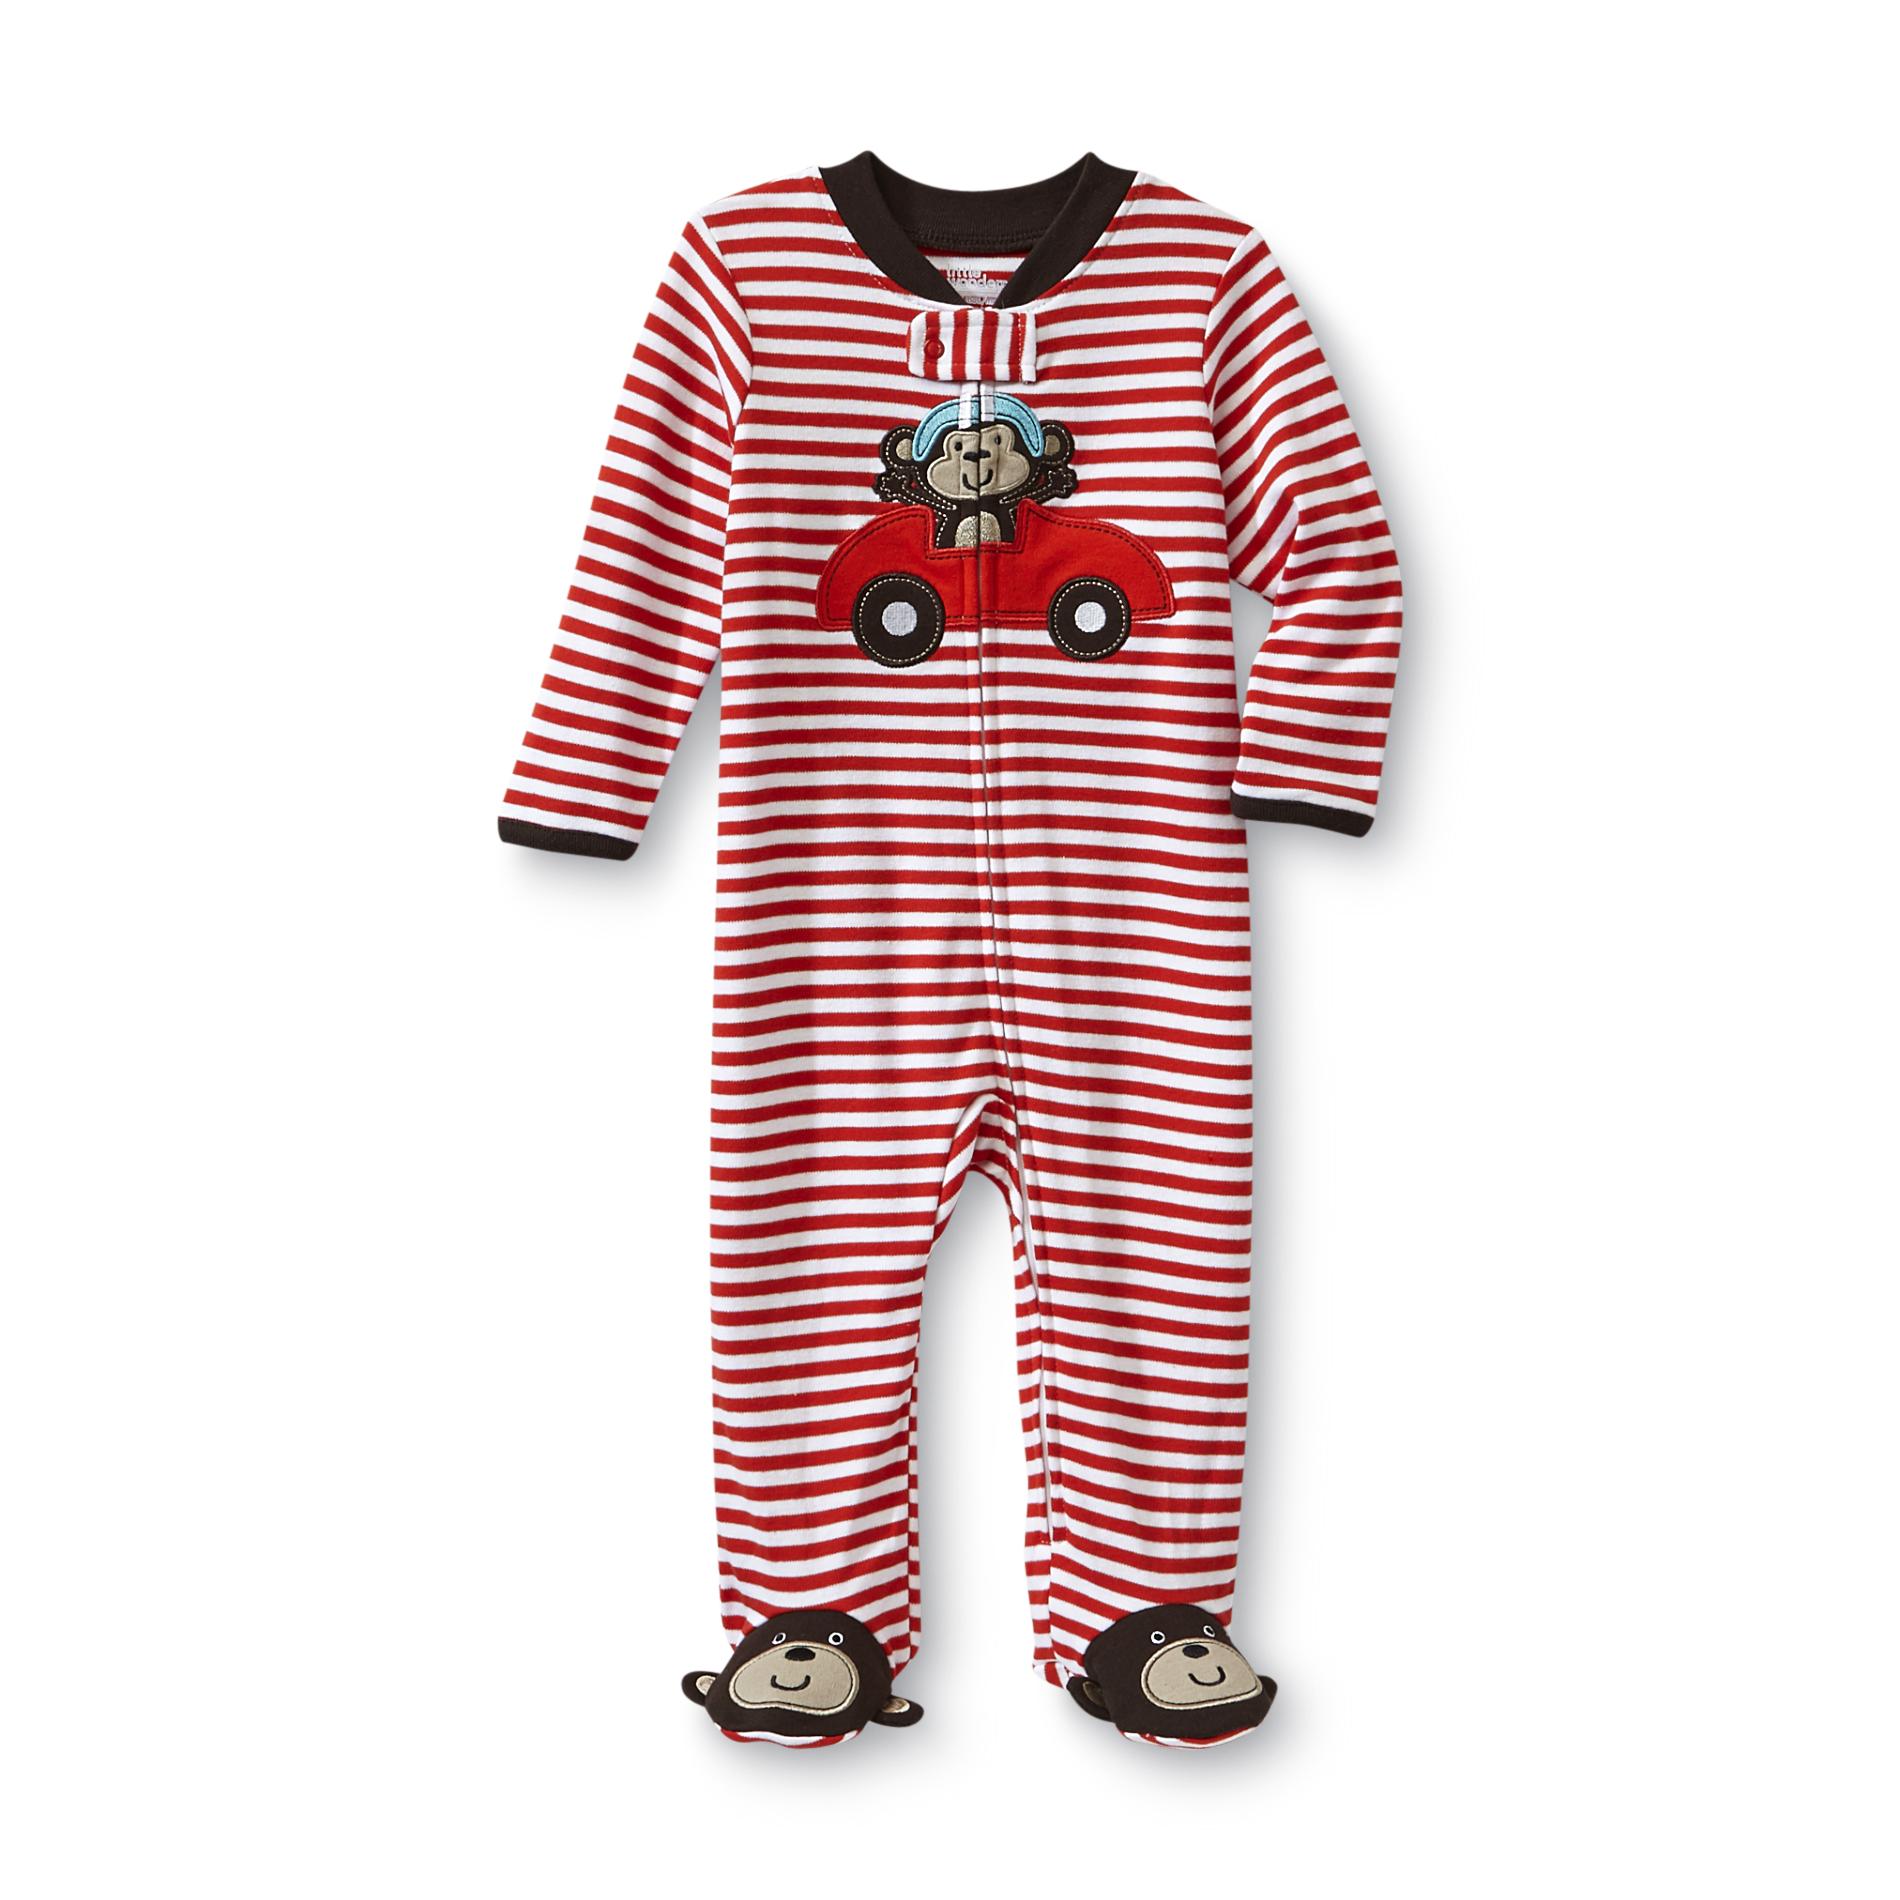 Little Wonders Infant Boy's Footed Pajamas - Monkey